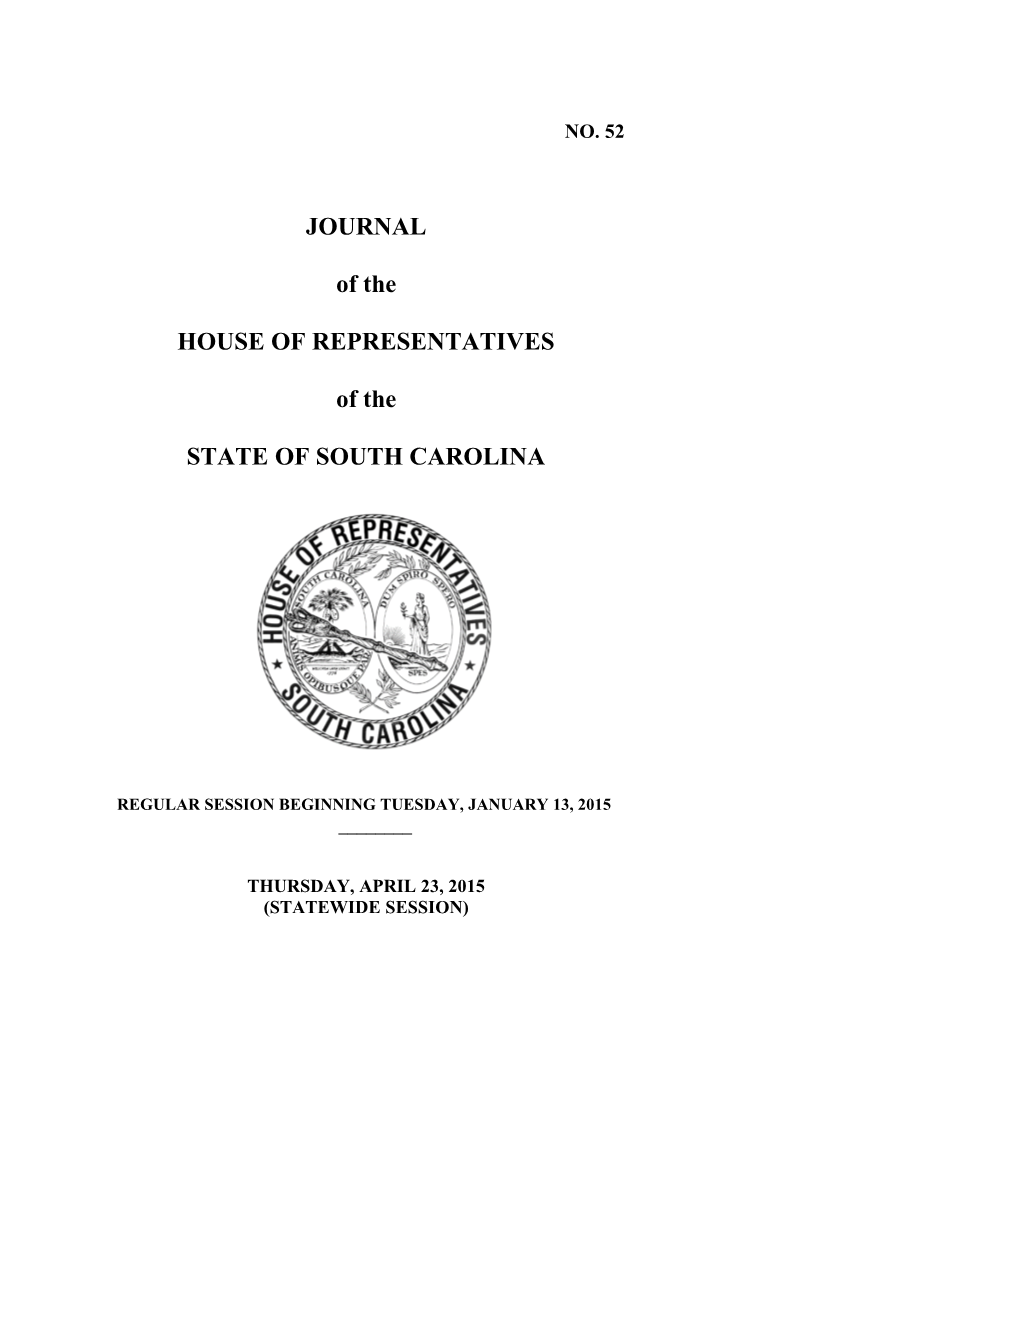 House Journal for 4/23/2015 - South Carolina Legislature Online